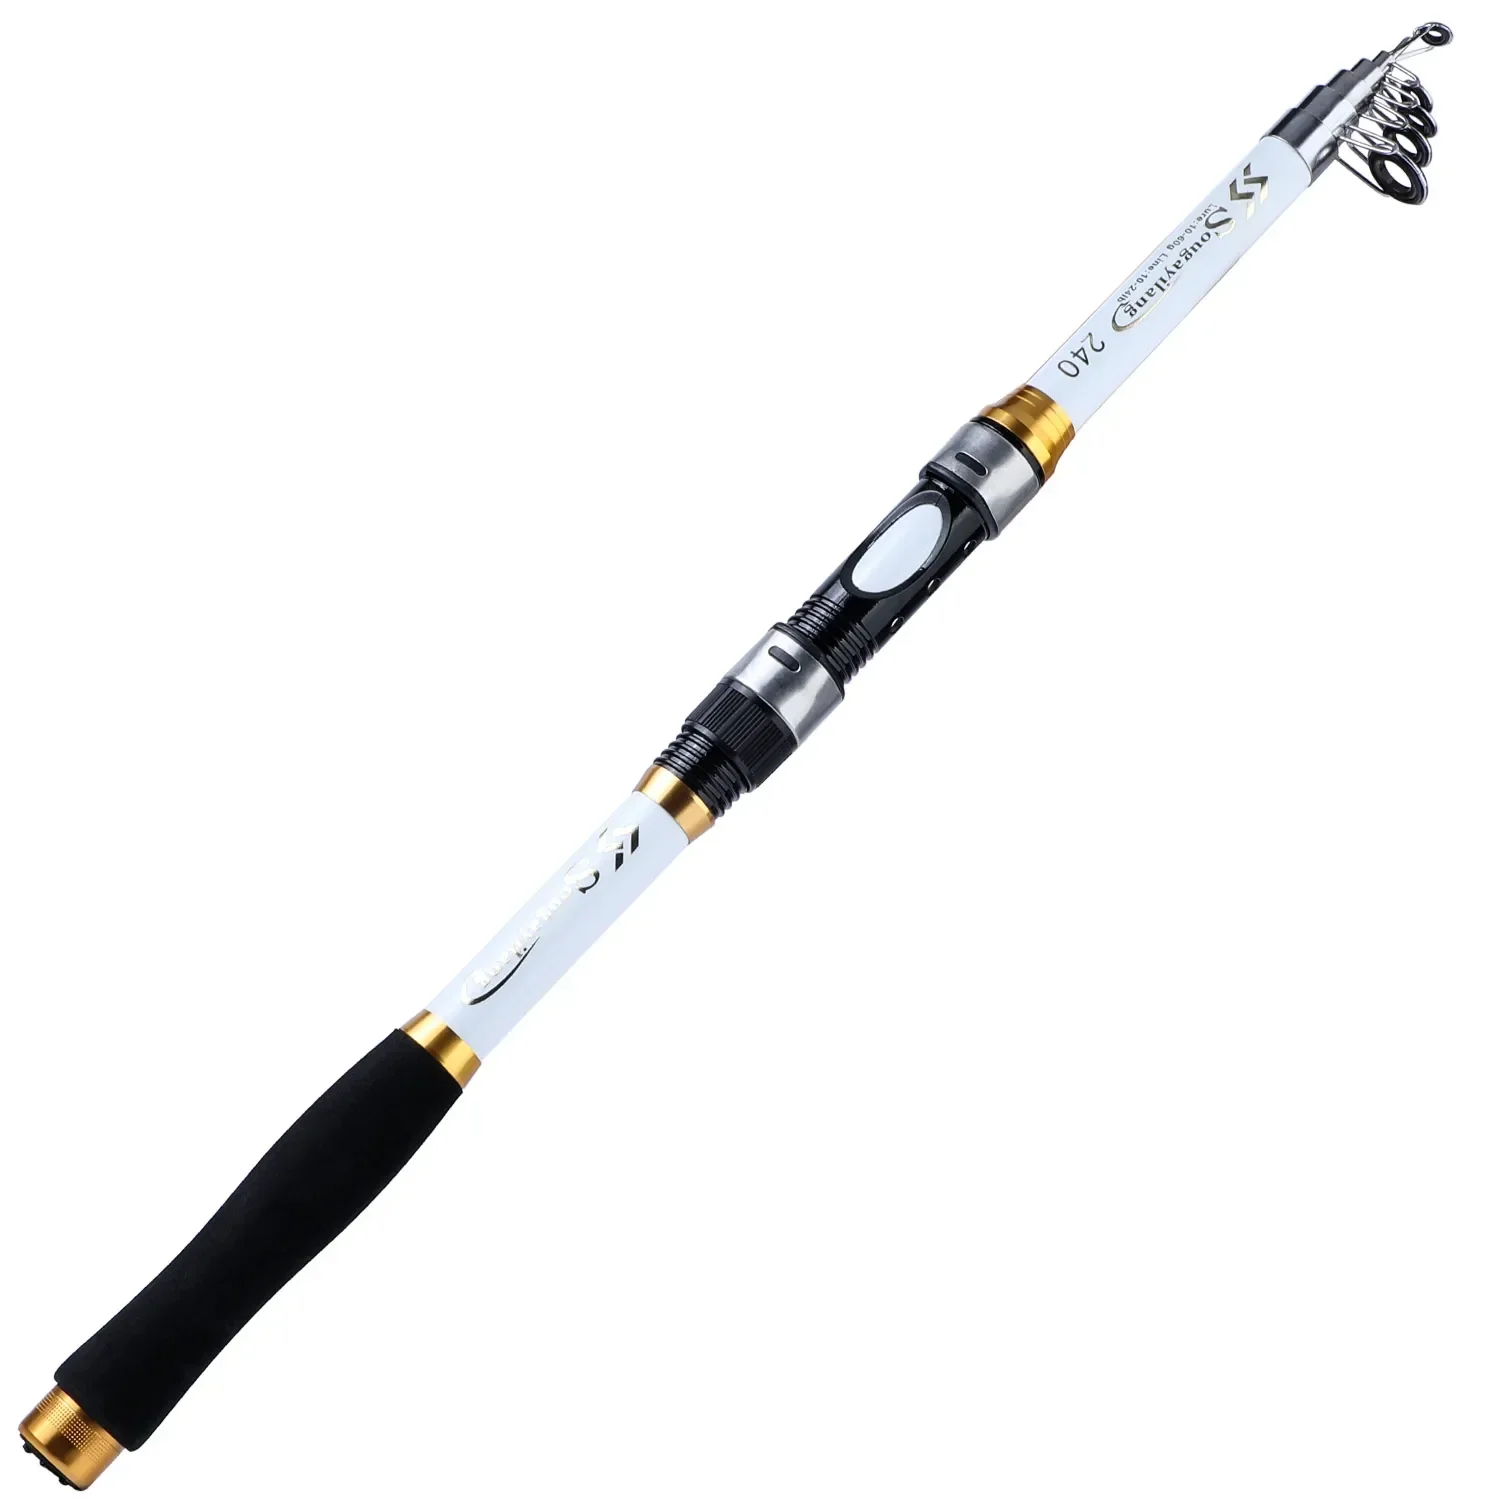 Magreel Telescopic Fishing Rod - Fishing Rods - AliExpress